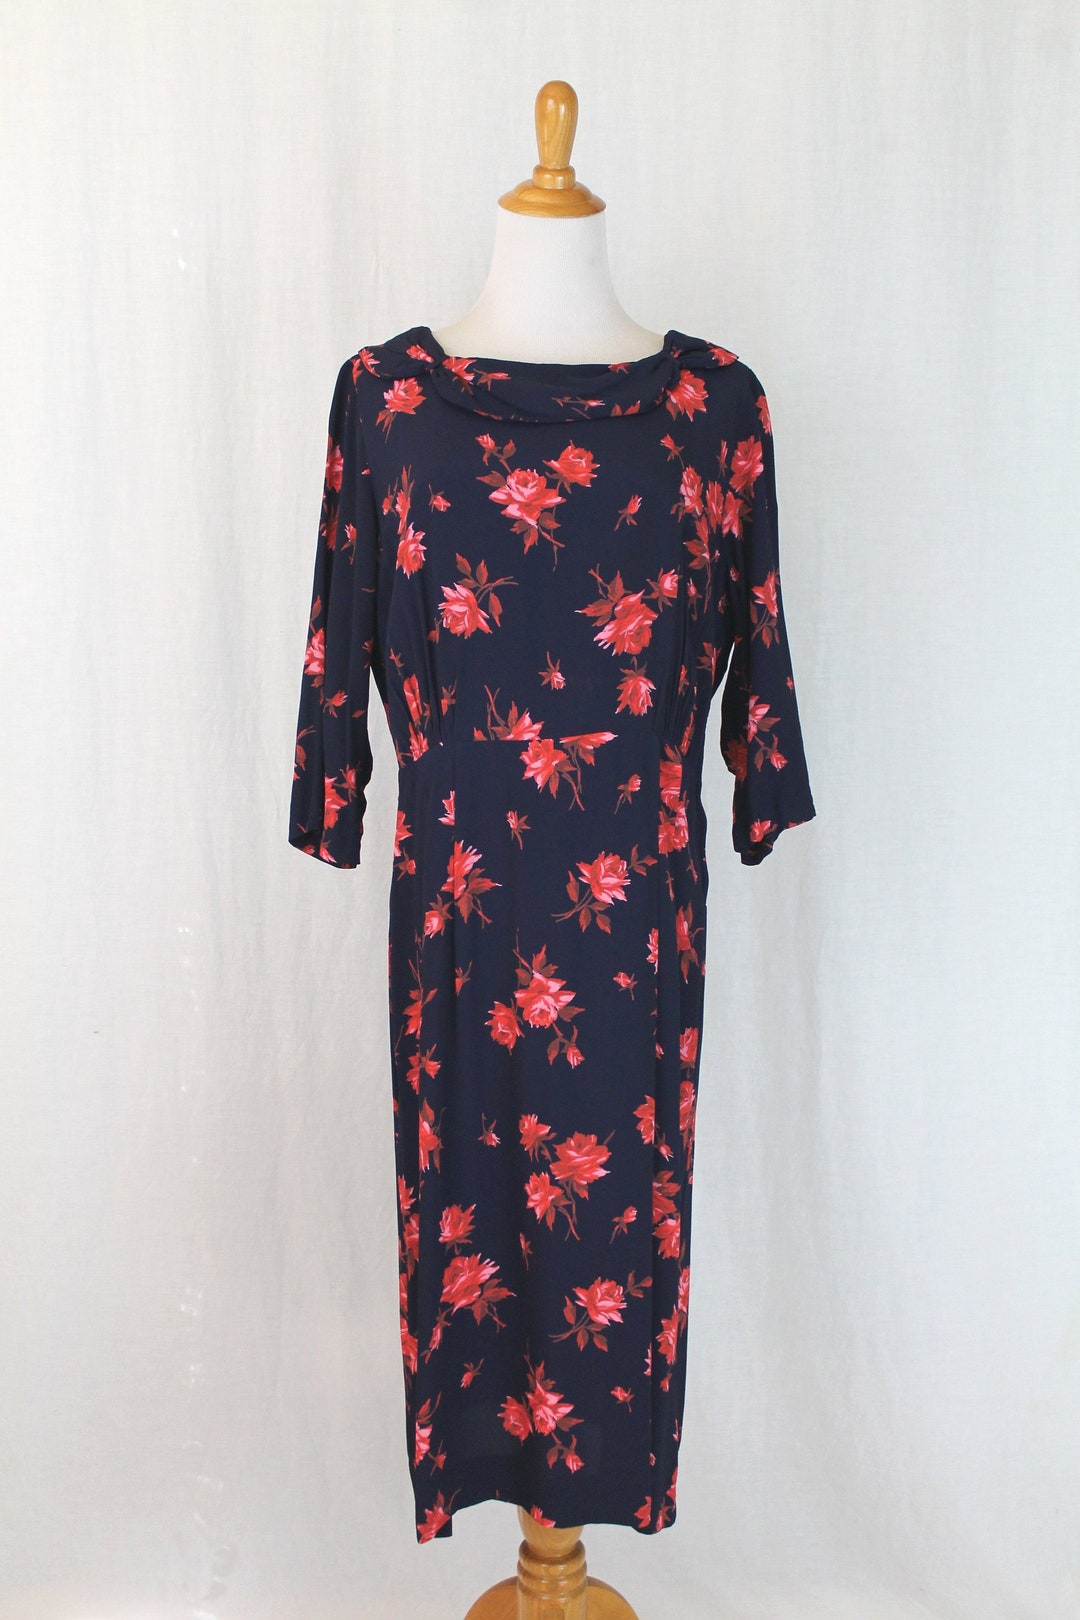 1940s Red and Blue Rose Print Silk Dress Size Medium - Etsy